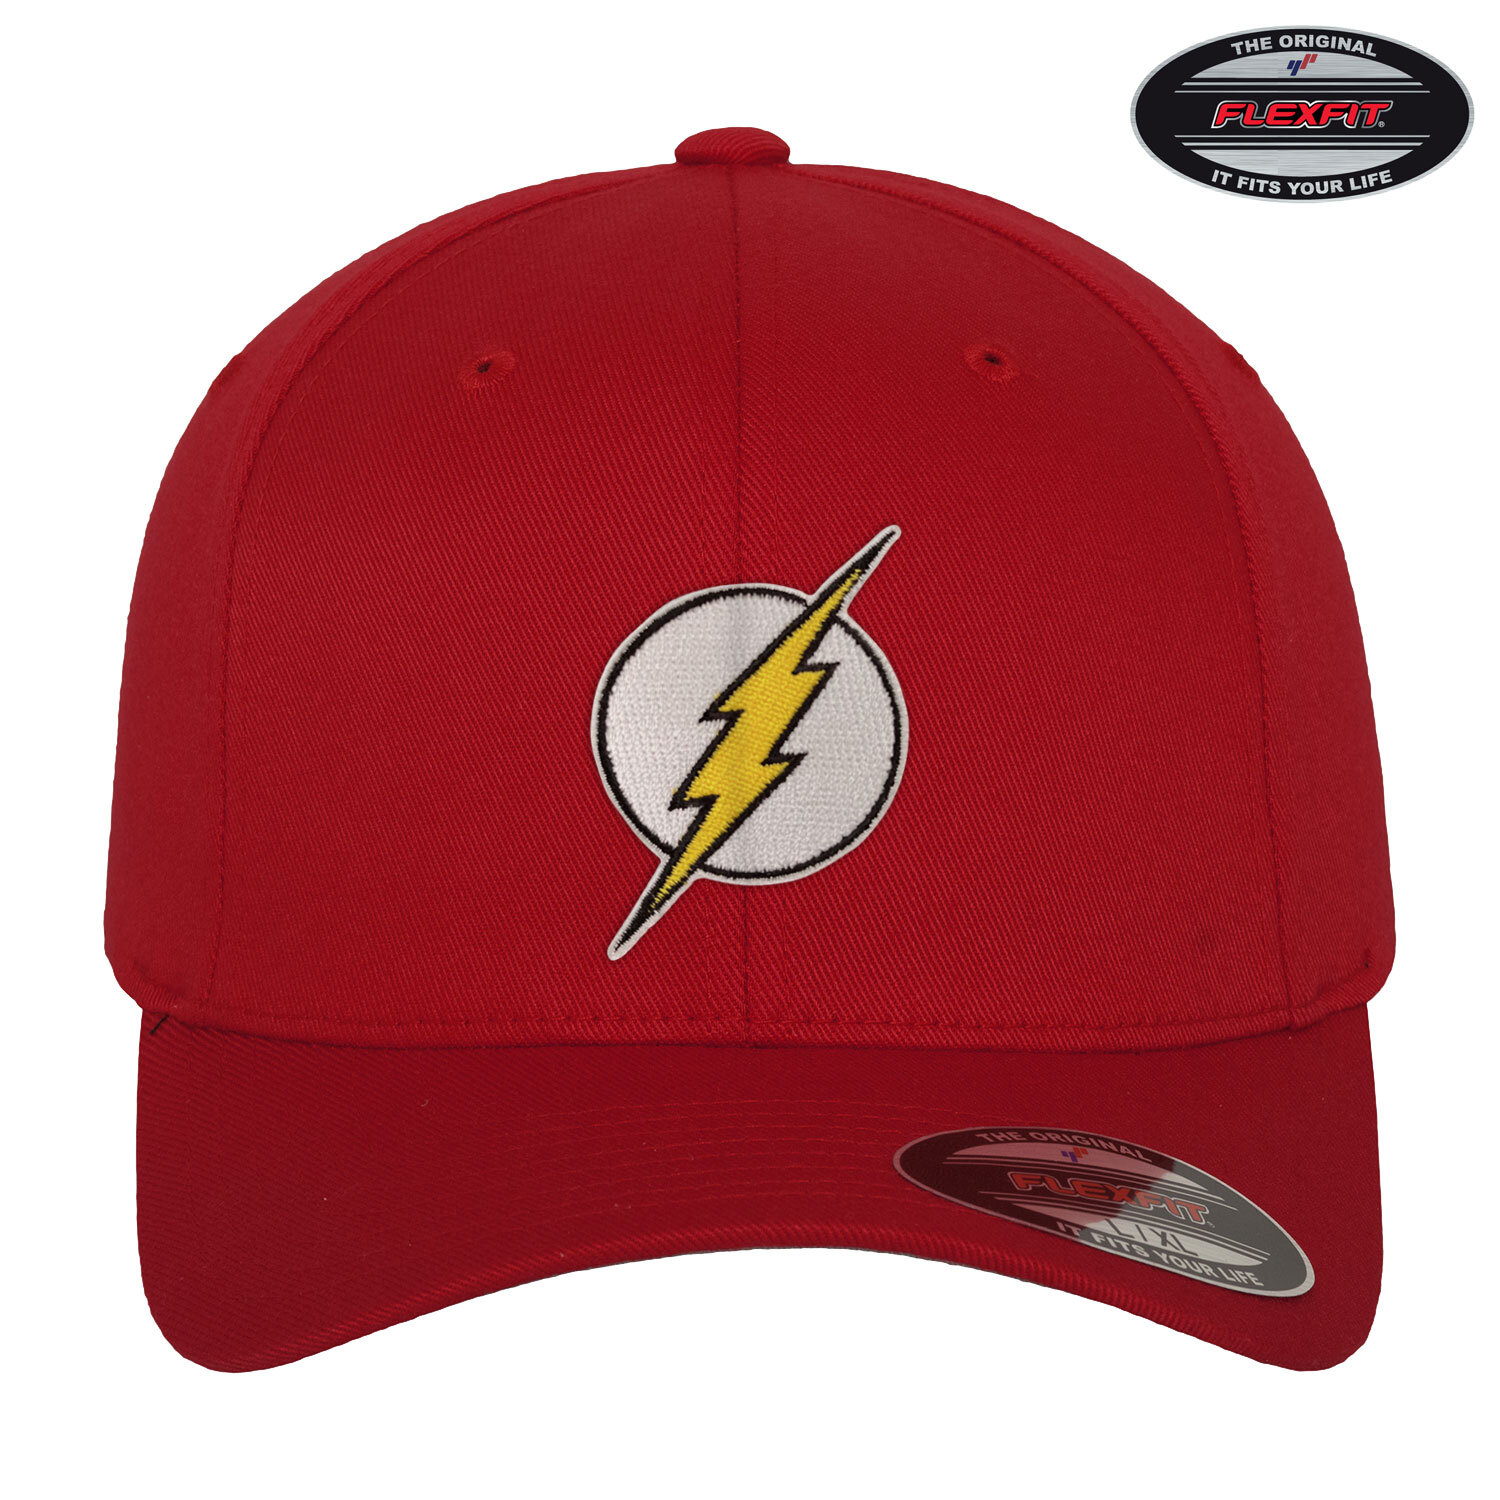 The Flash Flexfit Cap